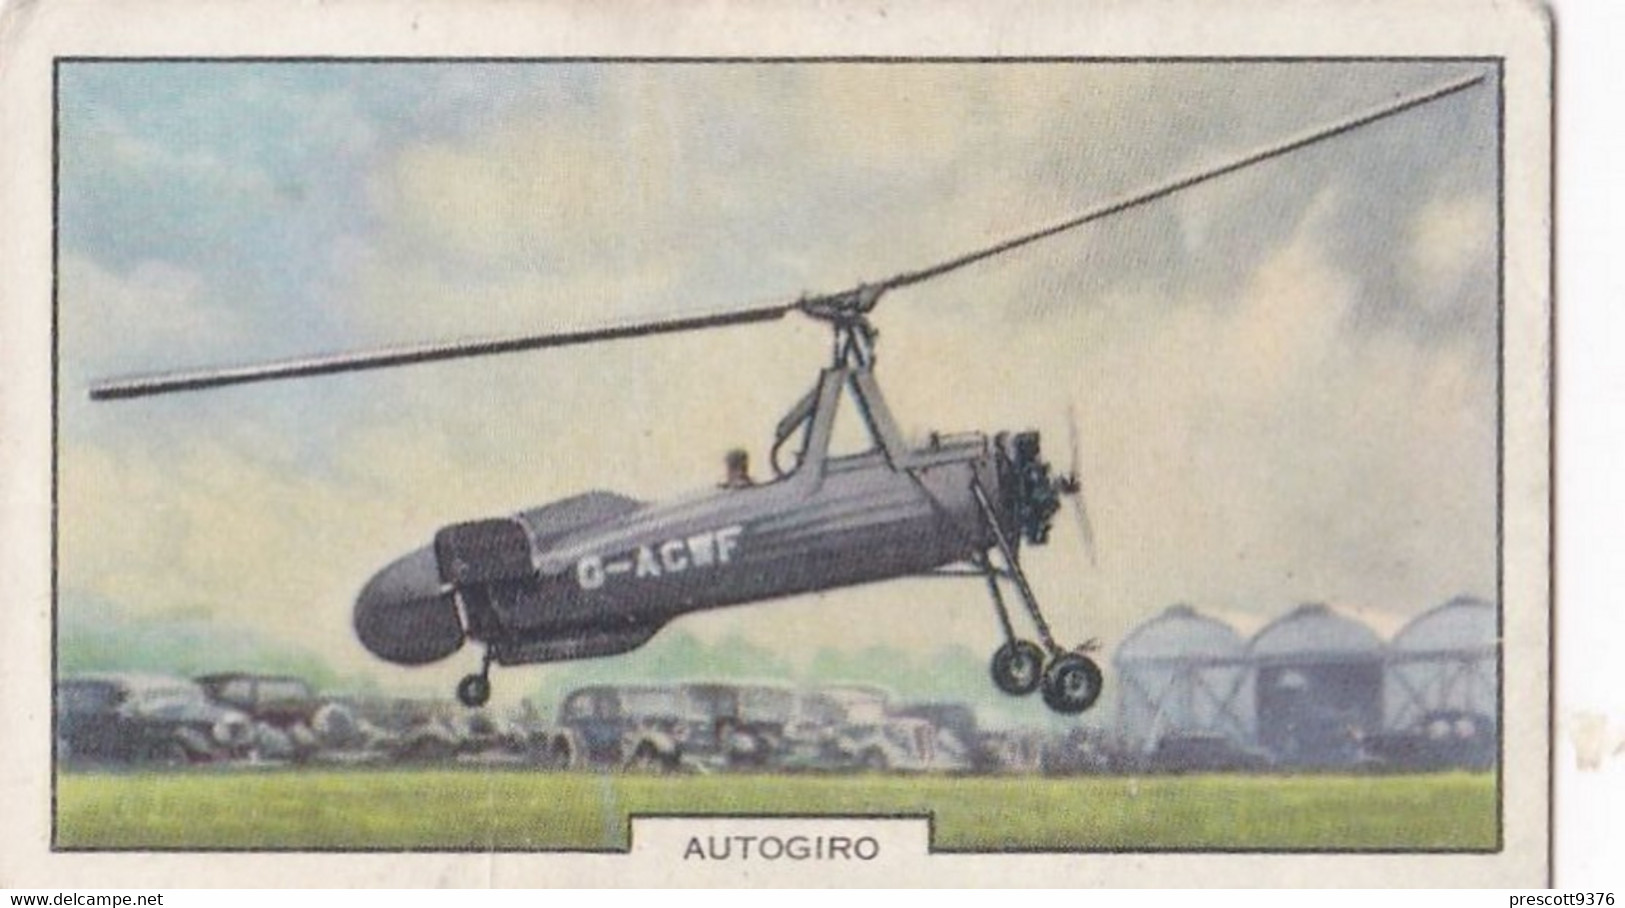 Aeroplanes 1939 - 27 Cierva Autogiro - Gallaher Cigarette Card - Original, Military Aircraft - Gallaher